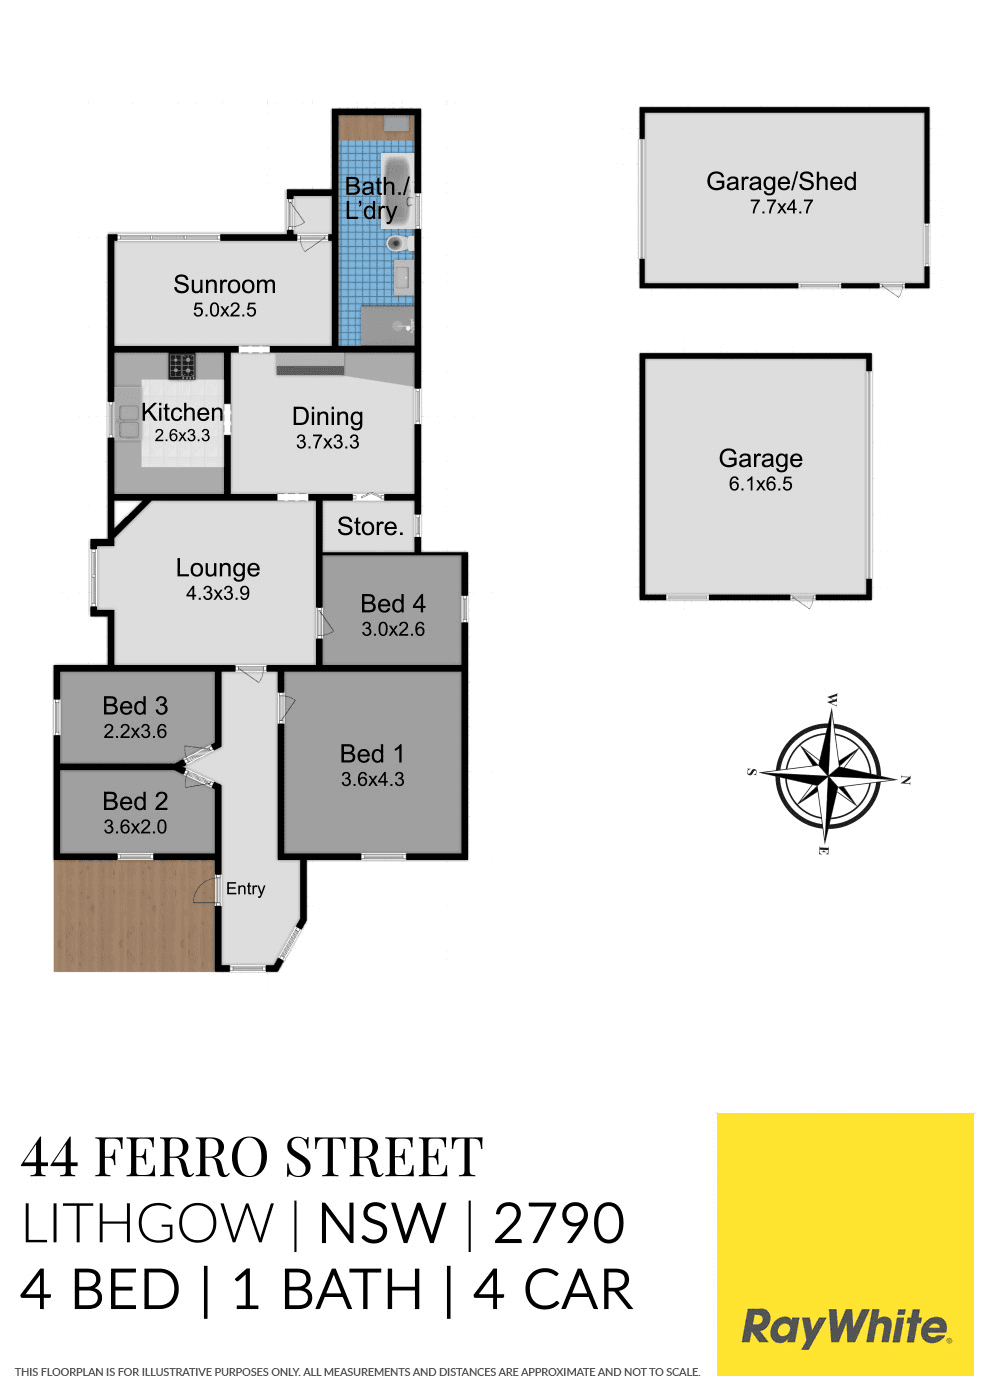 44 Ferro Street, LITHGOW, NSW 2790